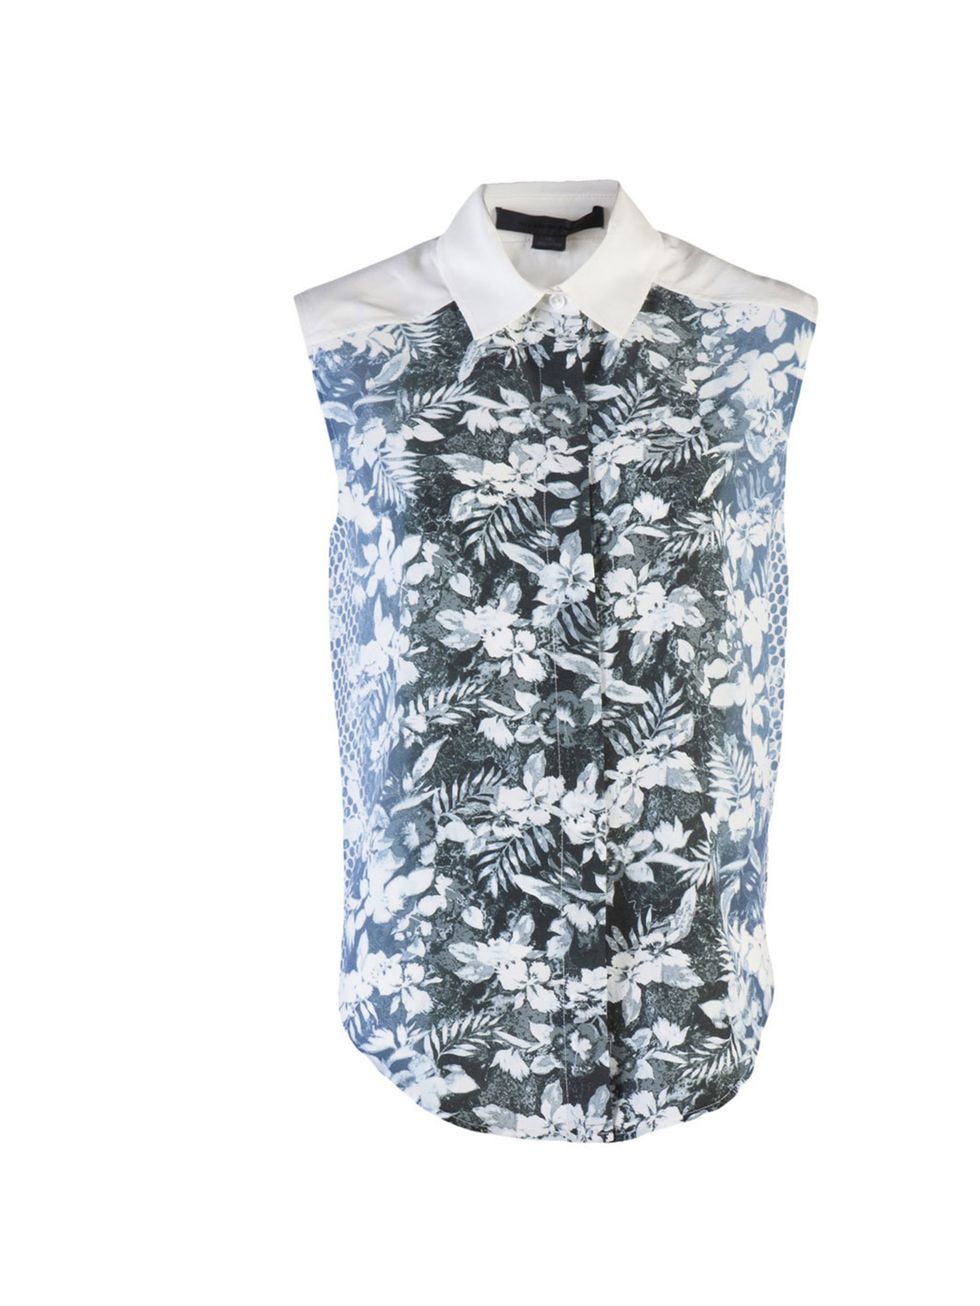 <p>Alexander Wang sleeveless floral blouse, £284, at Farfetch</p><p><a href="http://shopping.elleuk.com/browse?fts=alexander+wang+floral+sleeveless+blouse">BUY NOW</a></p>